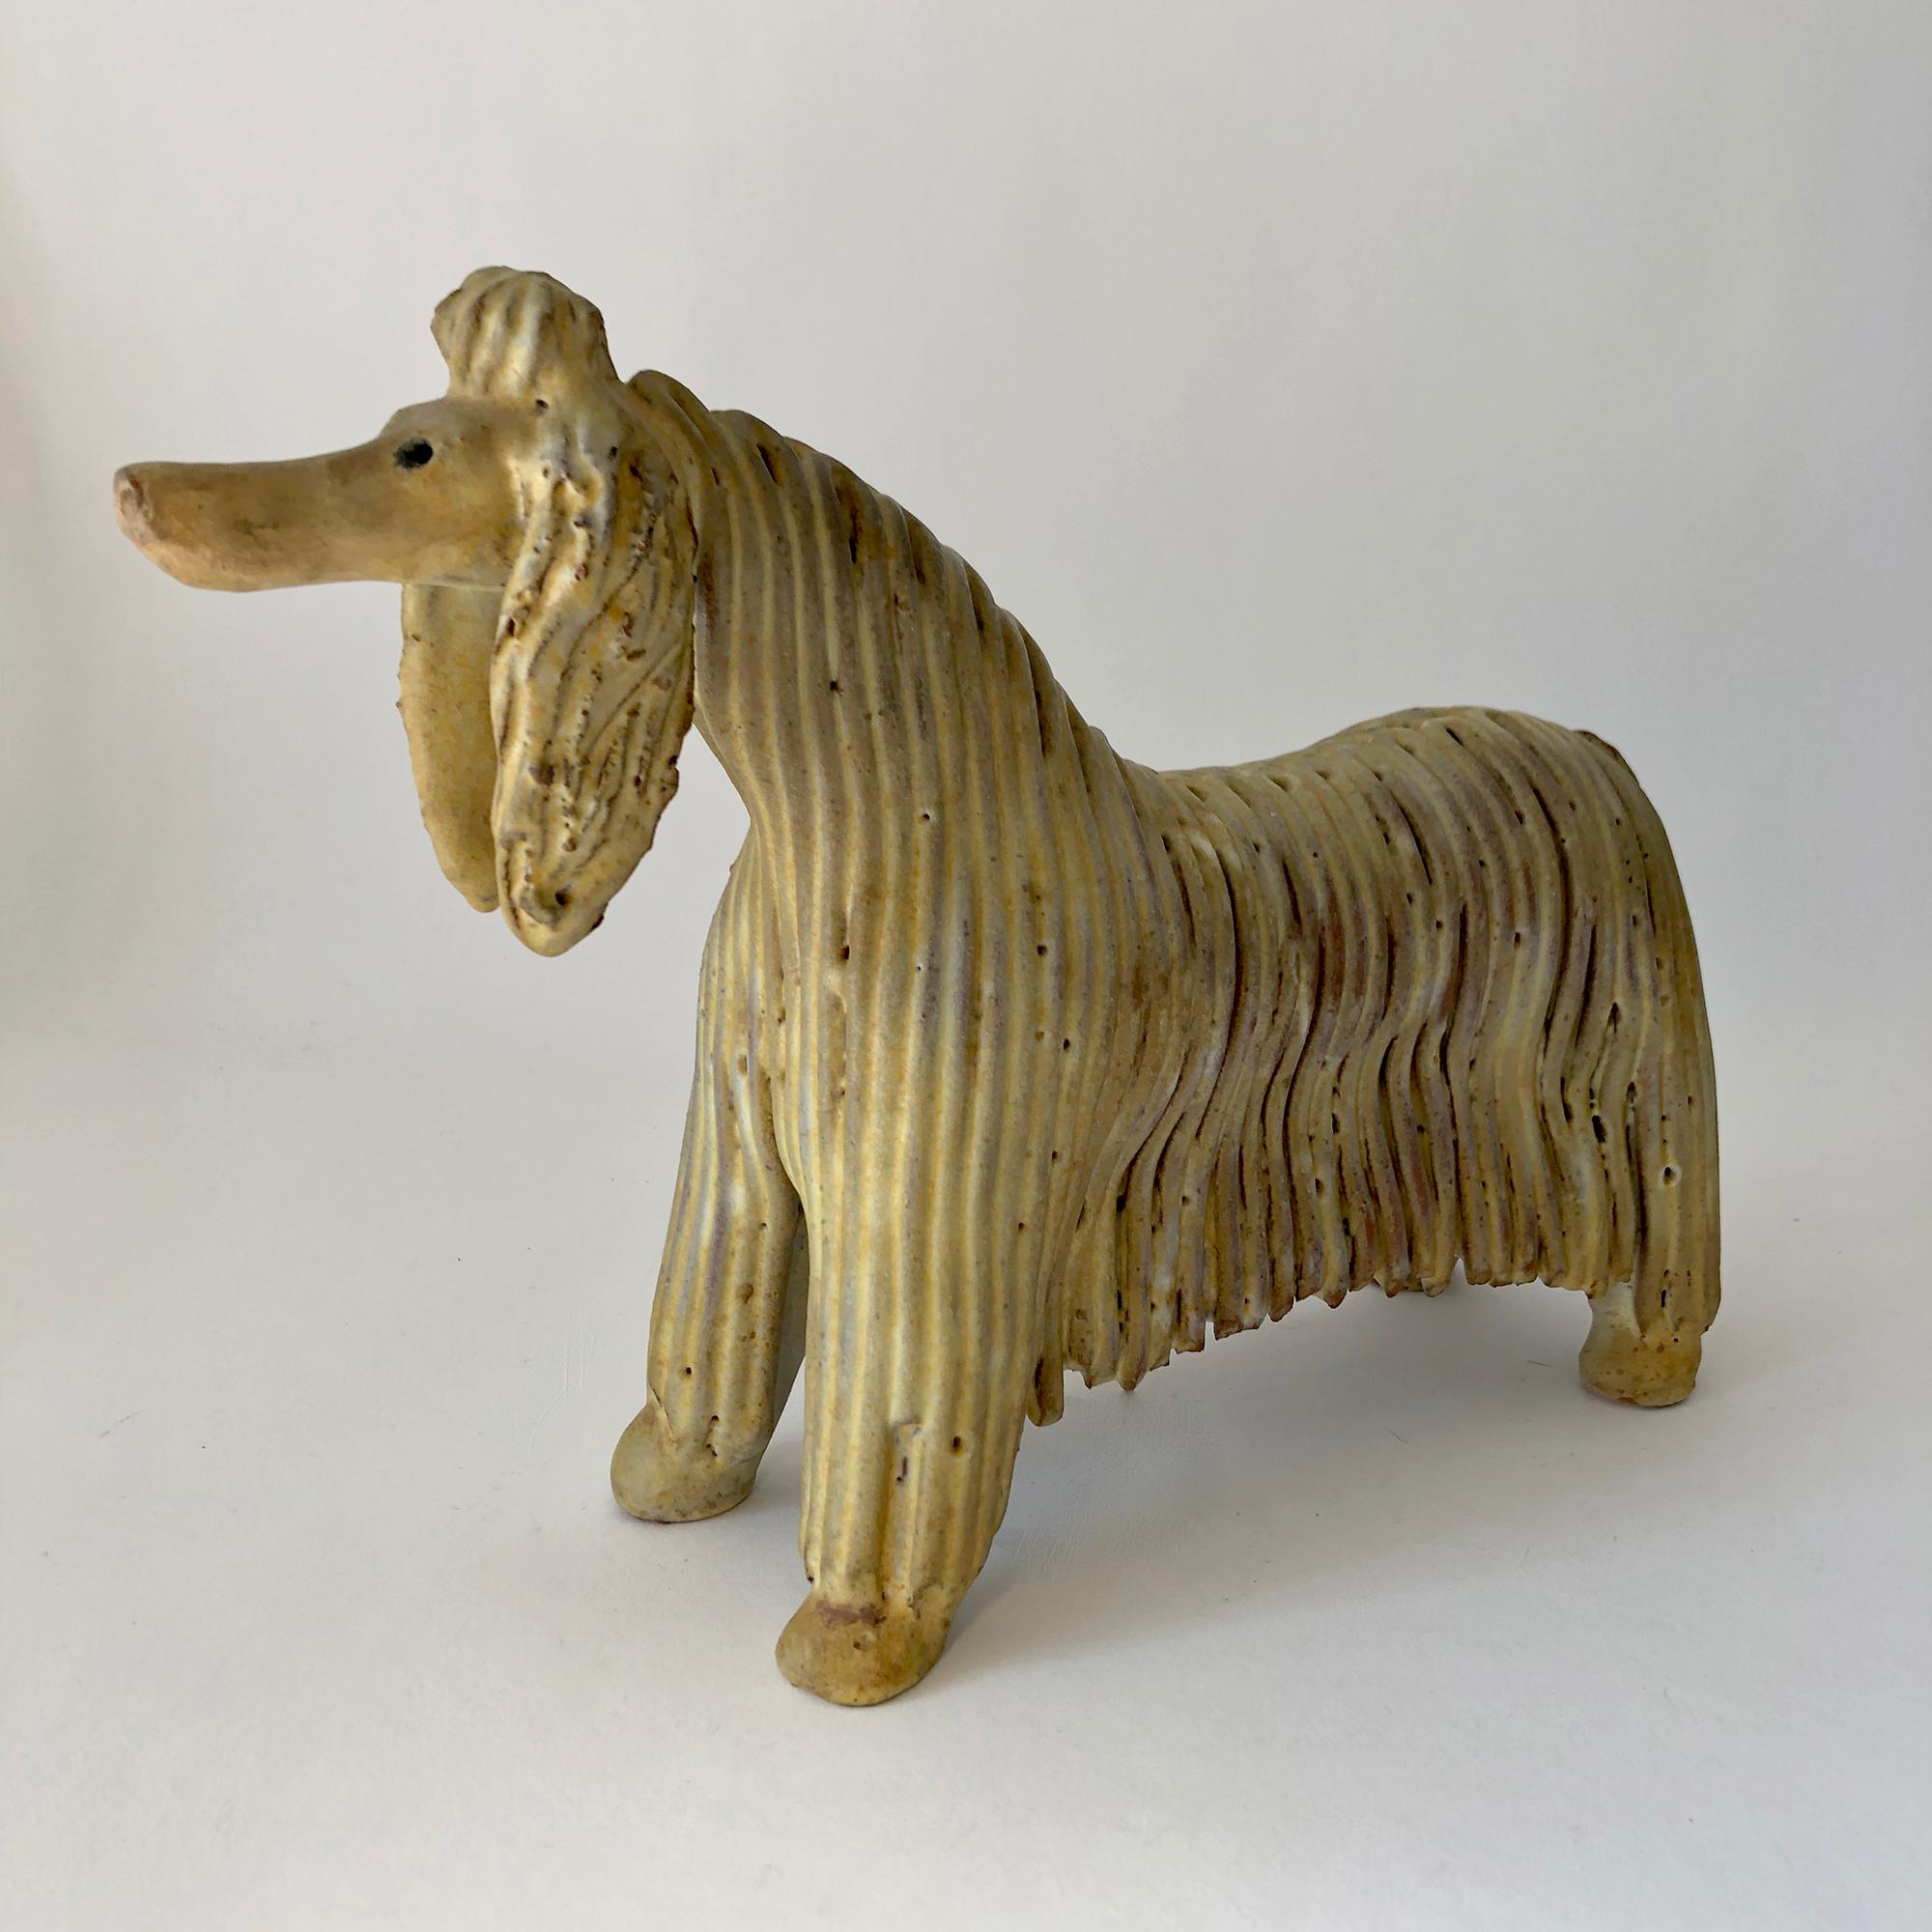 Spanish modern ceramic Afghan dog sculpture made by Miguel Durán-Lóriga for Alfaraz. Sculpture measures 8